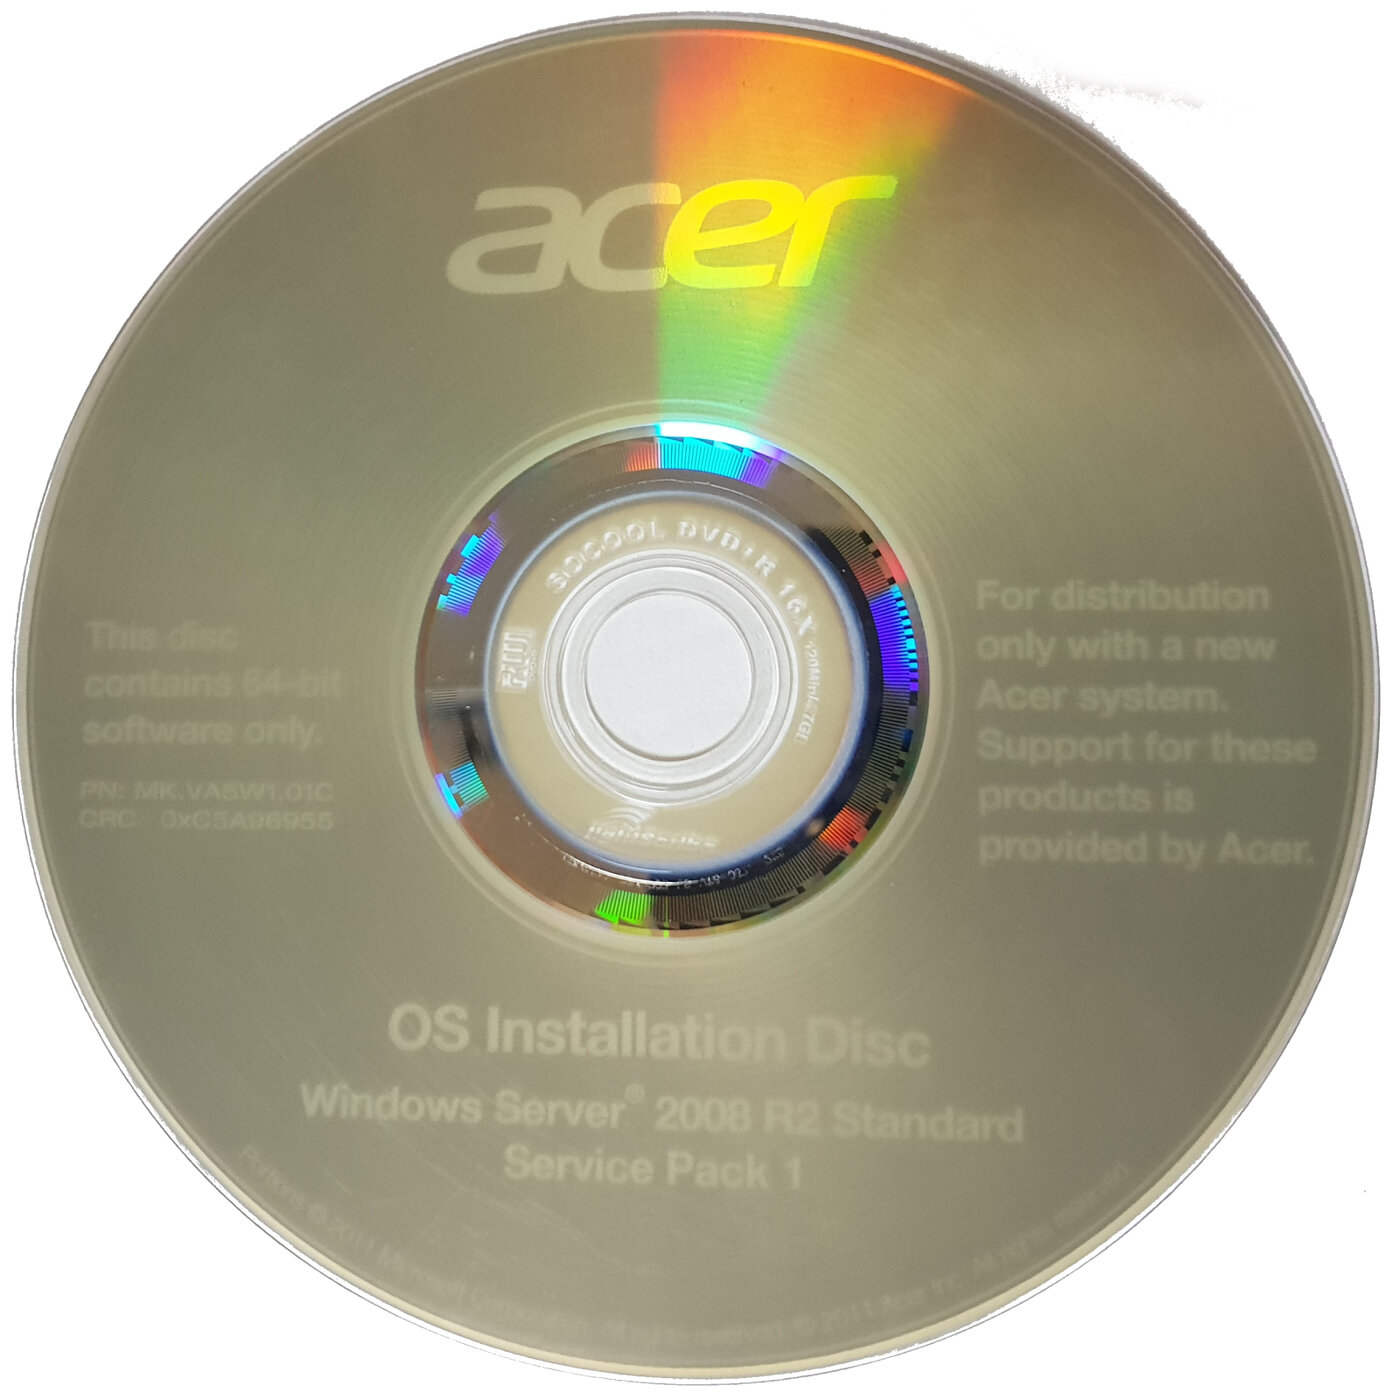 ПО Дистрибутив (диск) Windows Server 2008 R2 Standard by Acer